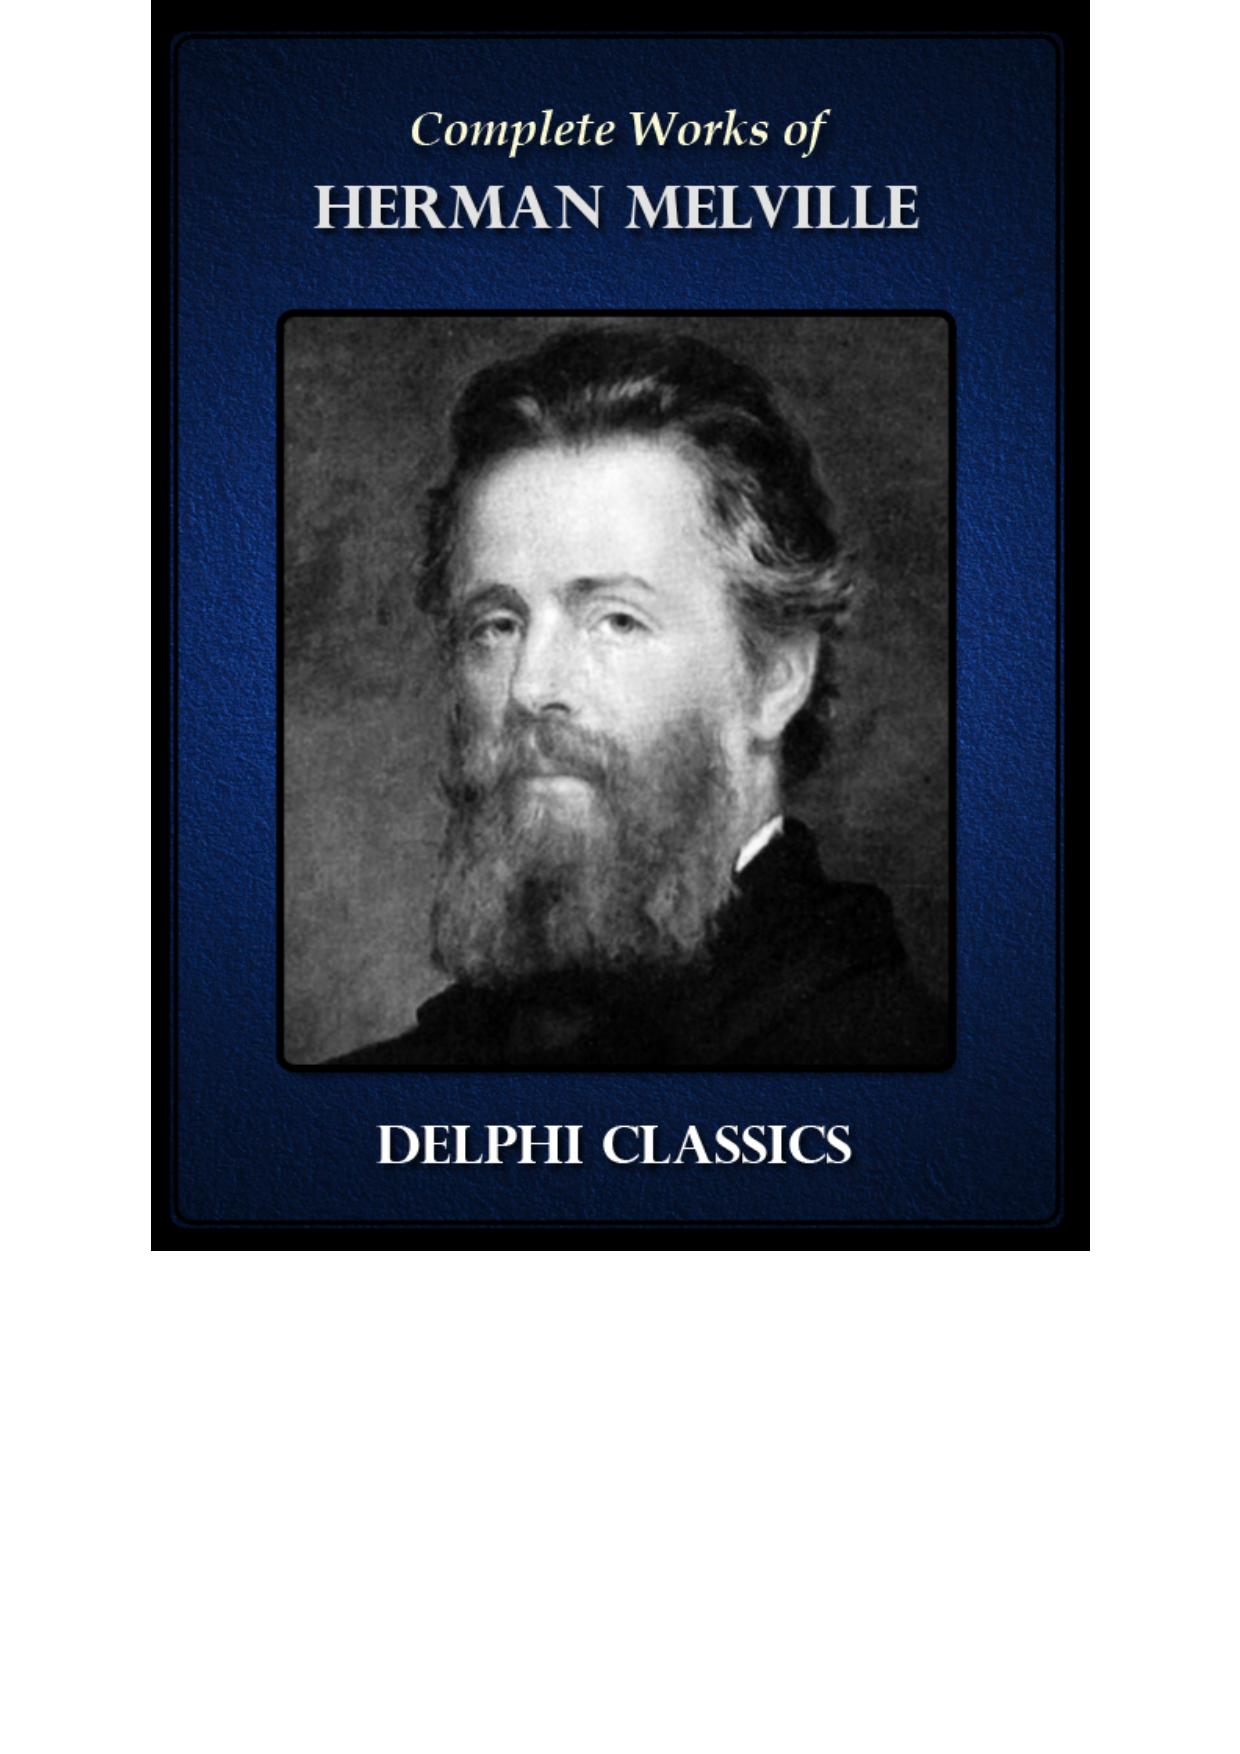 Complete Works of Herman Melville (Delphi Classics)